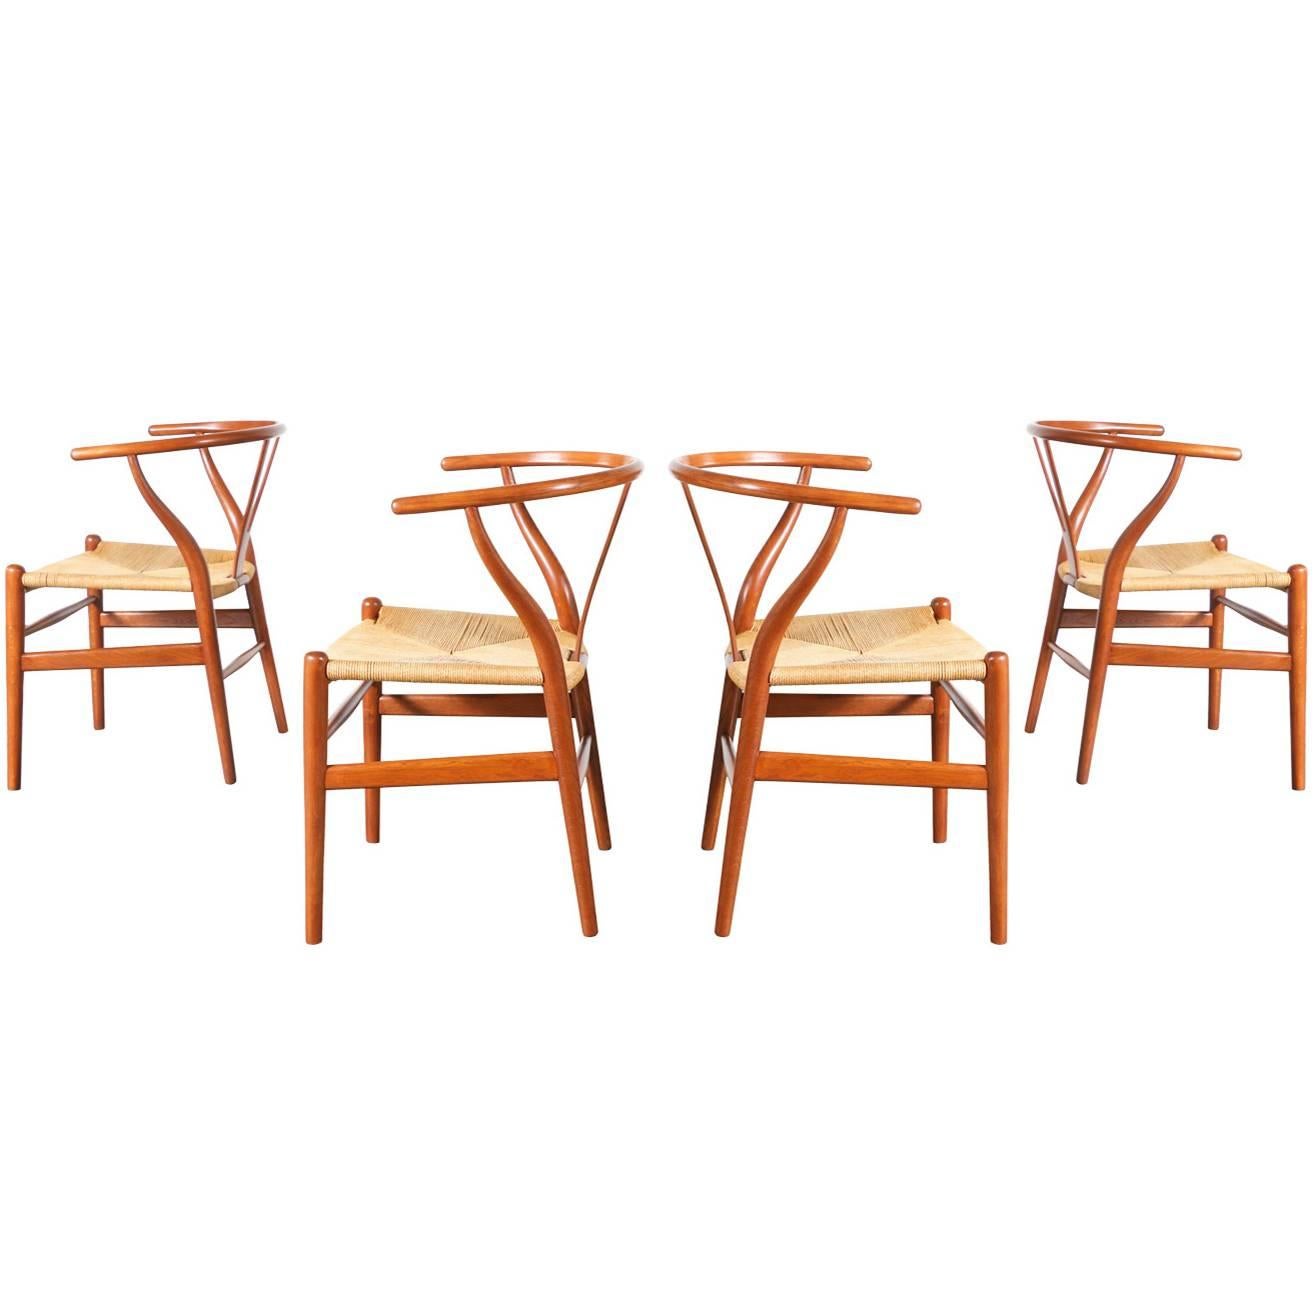 Hans J. Wegner “Wishbone” CH-24 Dining Chairs for Carl Hansen